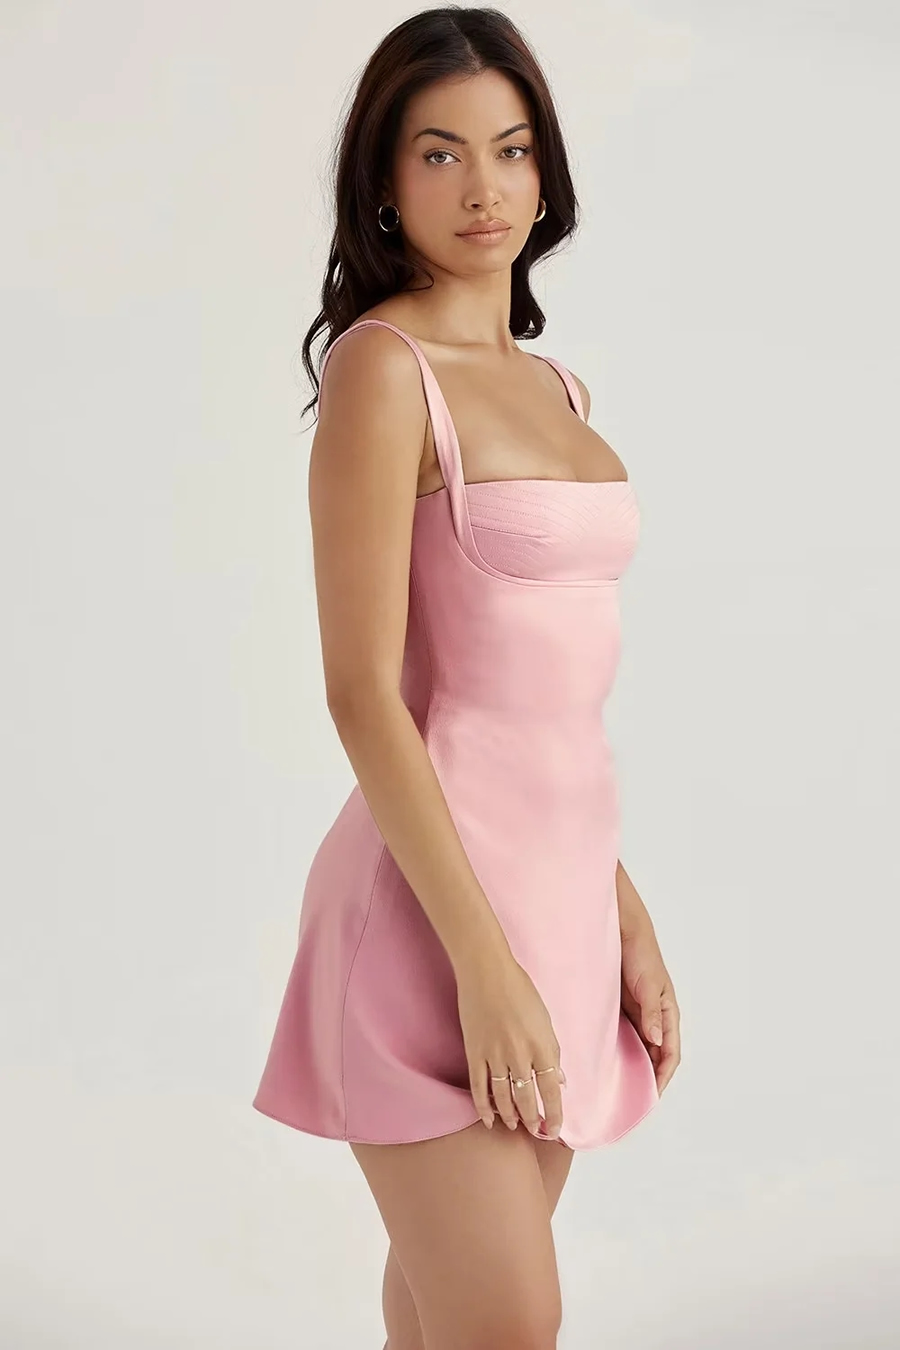 Fashion Pink Chest Embroidered Suspender Dress,Mini & Short Dresses